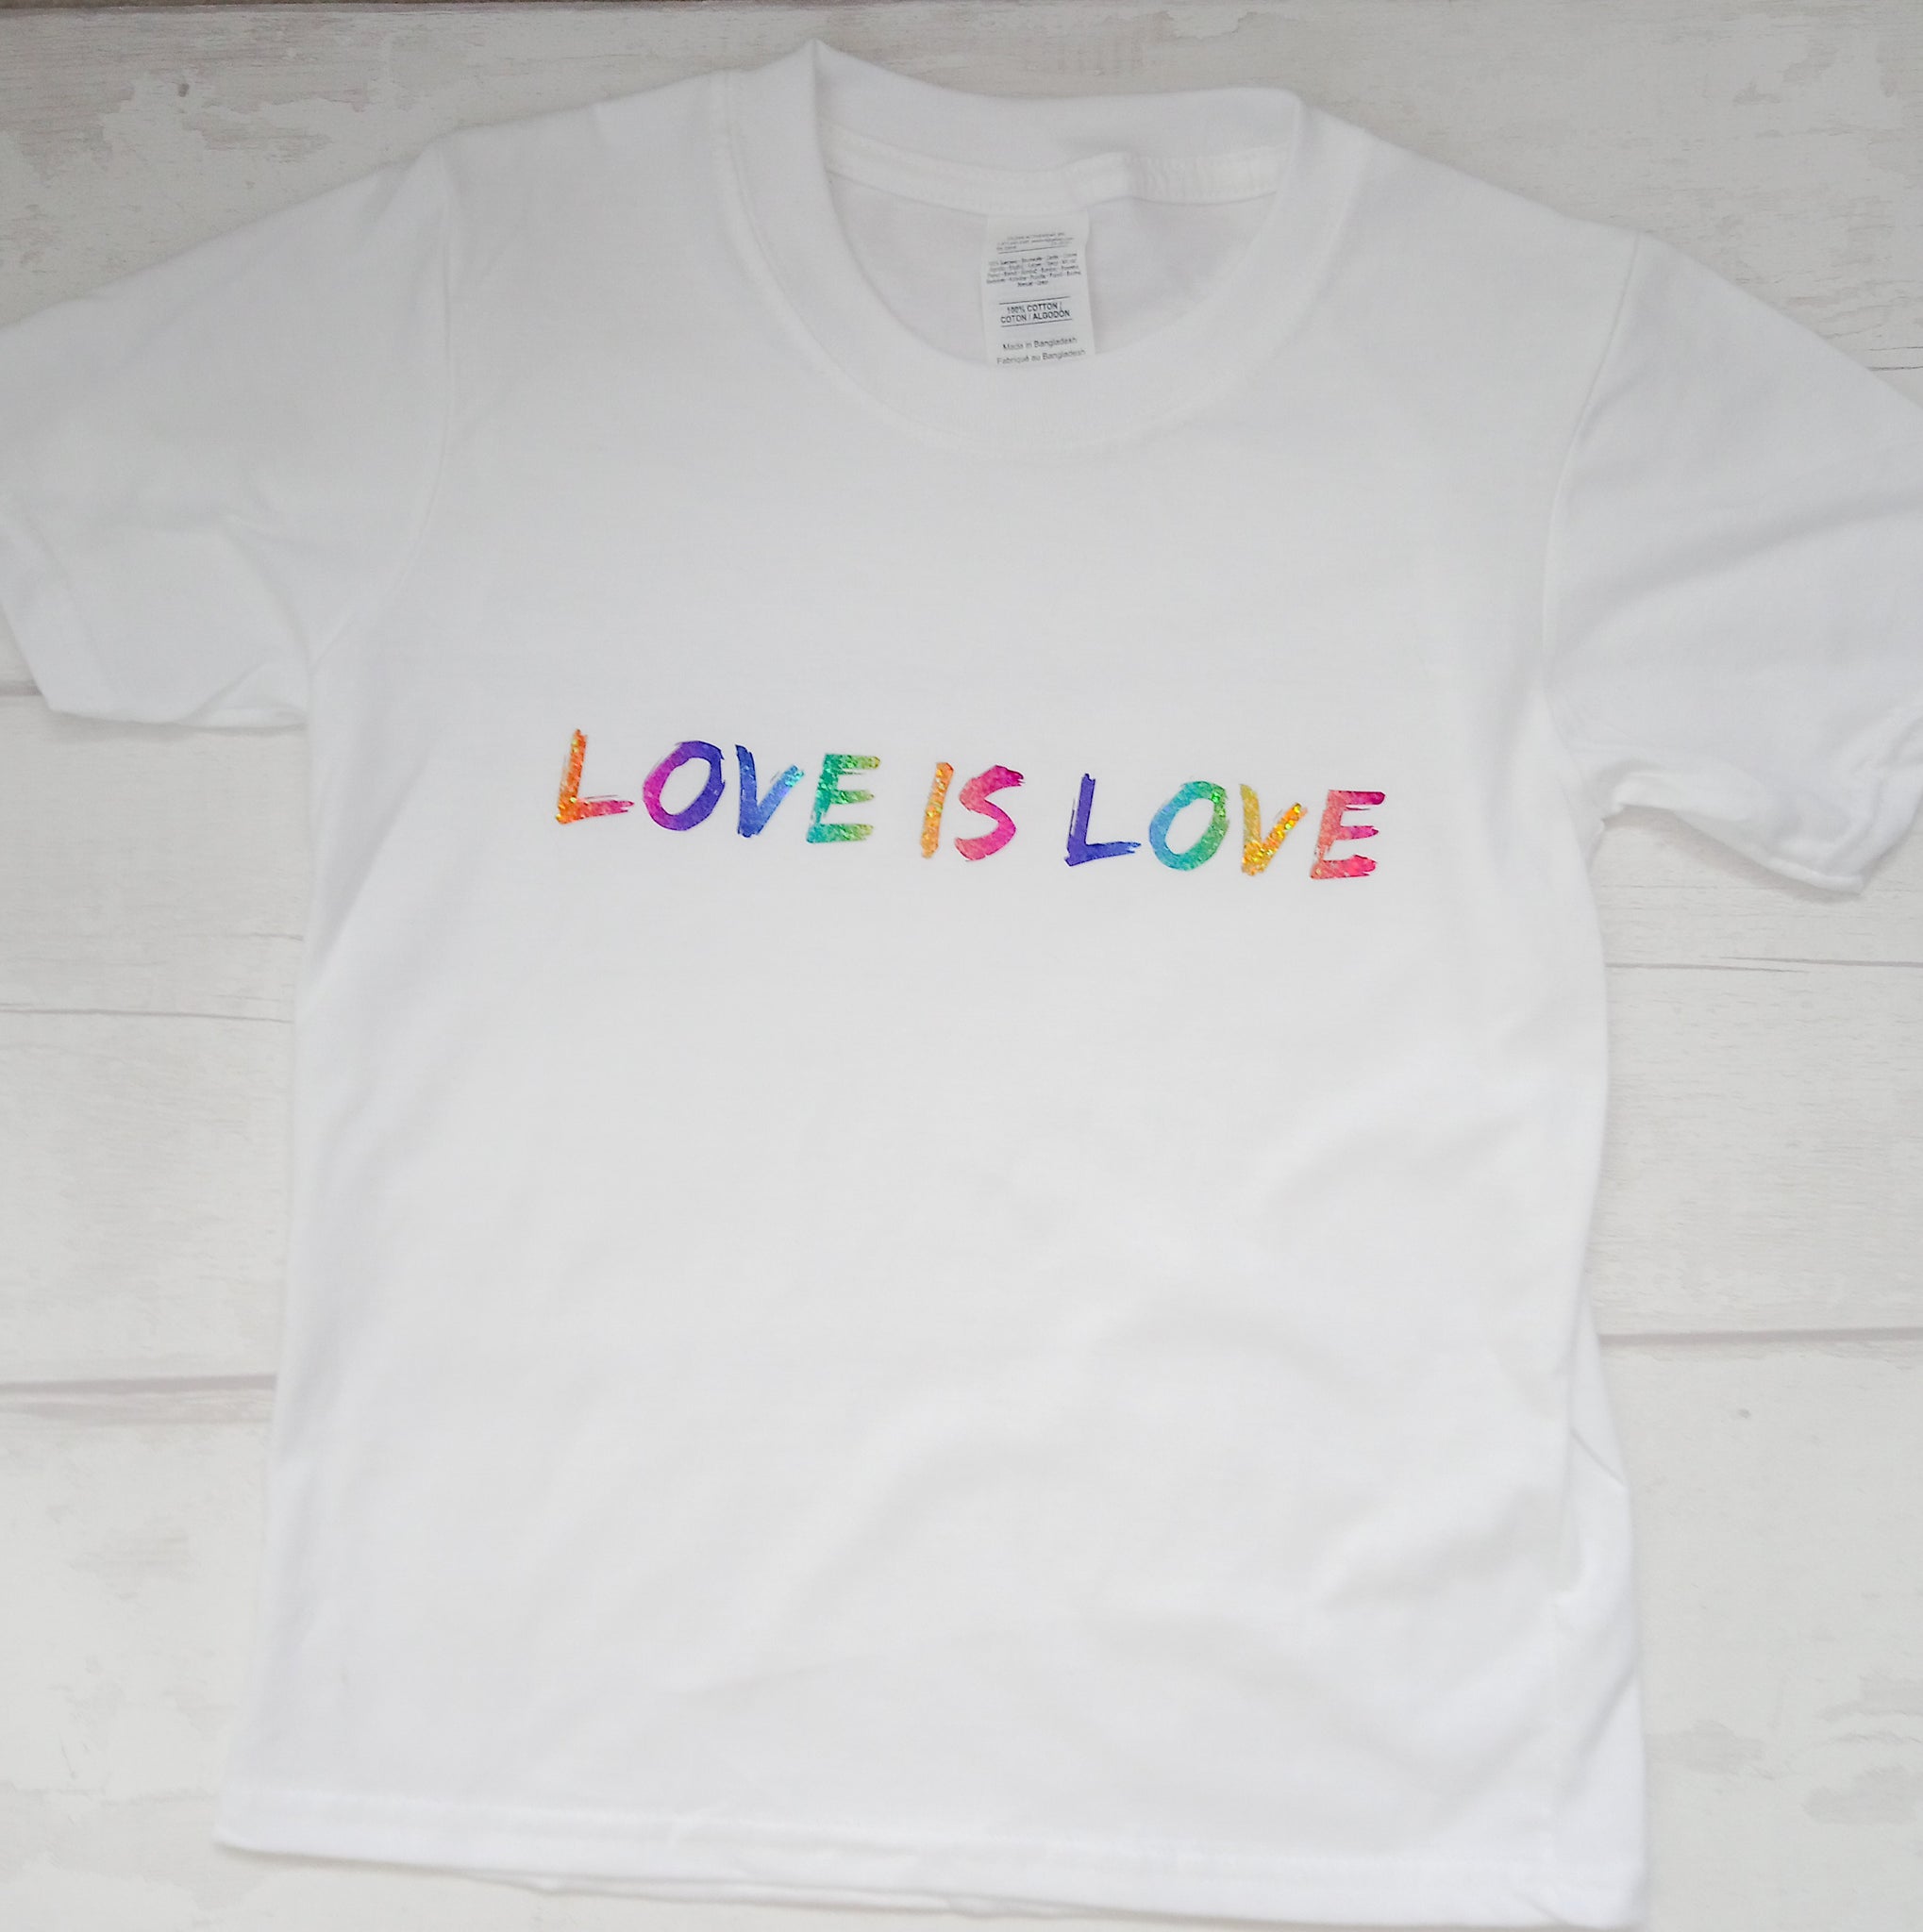 Gorgeous rainbow vinyl "love is love" unisex adults t shirt